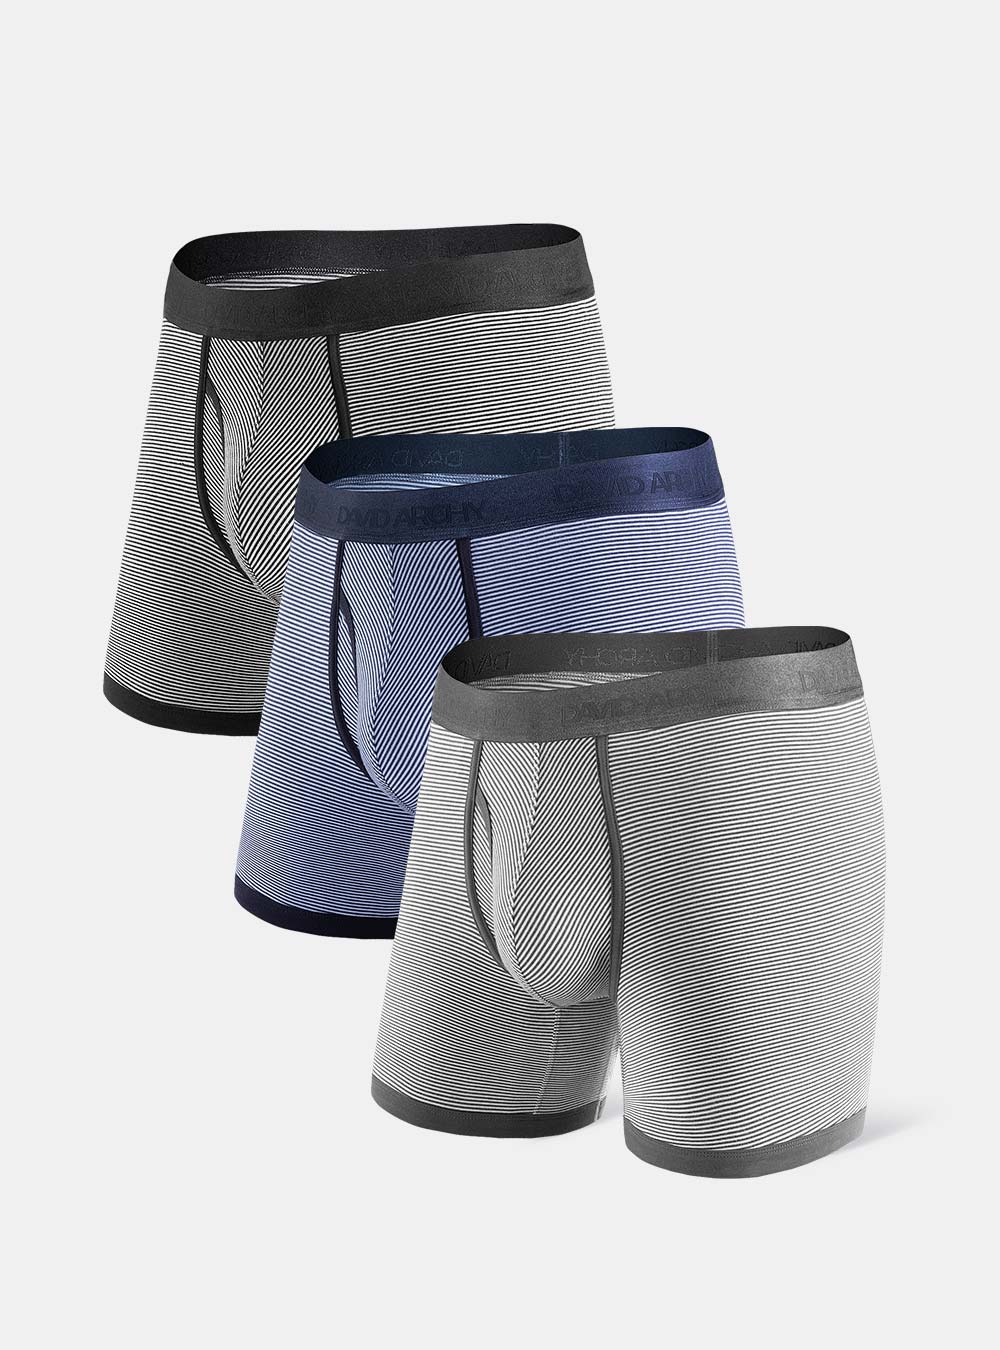 David Archy Clothing on X: Enjoy your training time with David Archy  Cotton-Modal Boxer Briefs.💪🏋️‍♂️ by IG : alexfit988 #davidarchy  #davidarchylifestyle #gains #zyzz #shred #bulk #gym #brah #push #pull #legs  #bench #squat